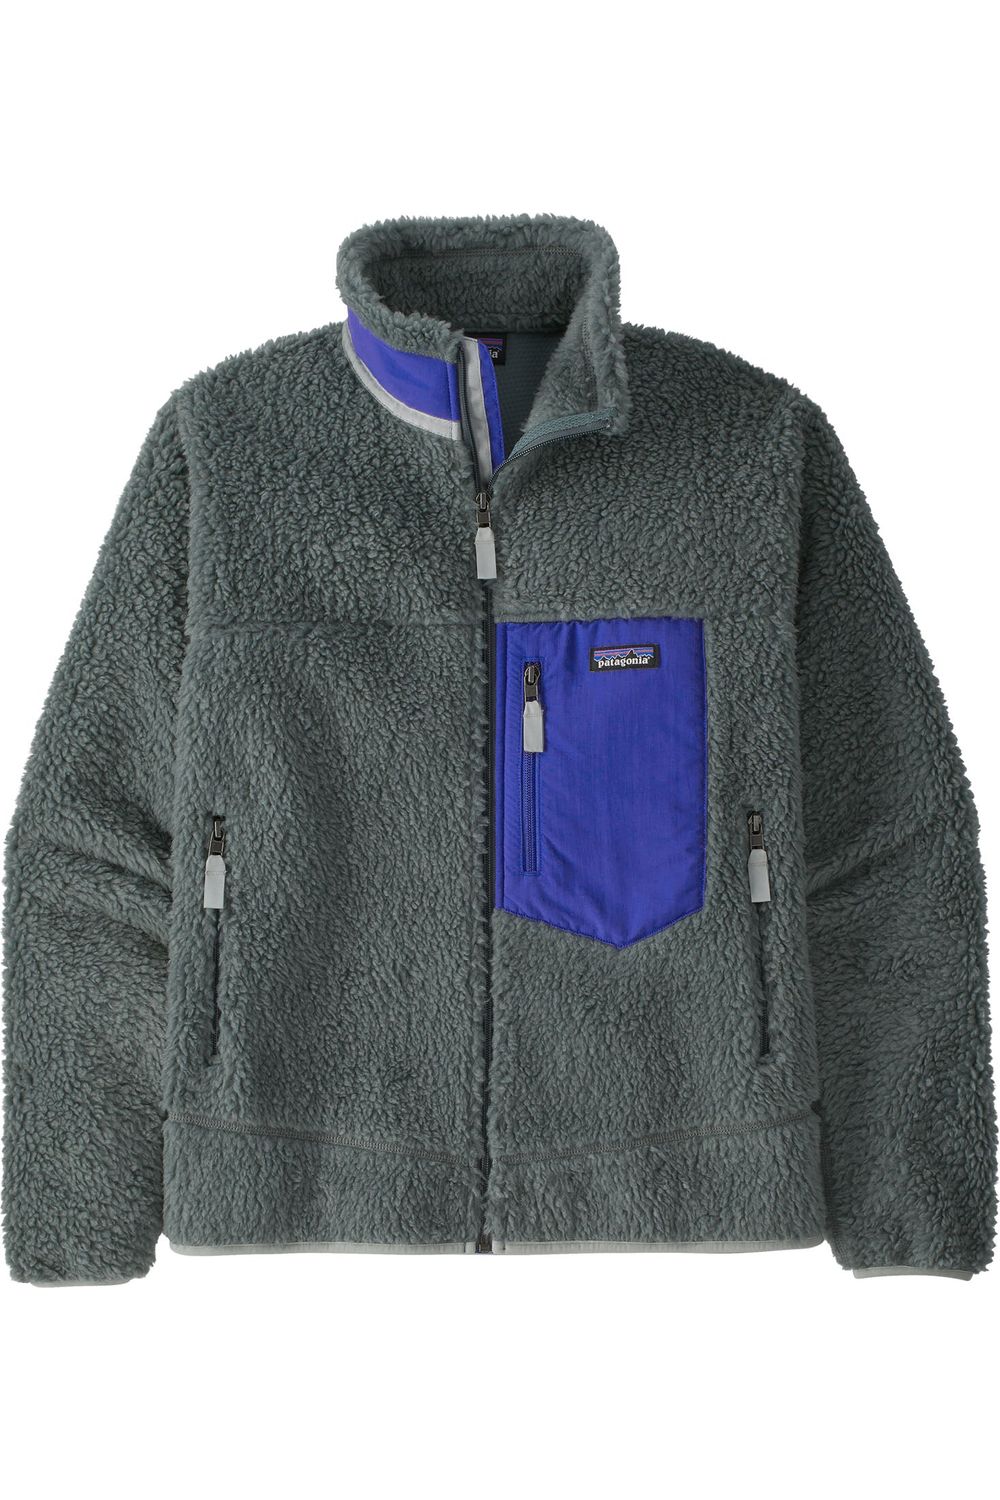 Patagonia Classic Retro X Fleece Jacket Nouveau Green